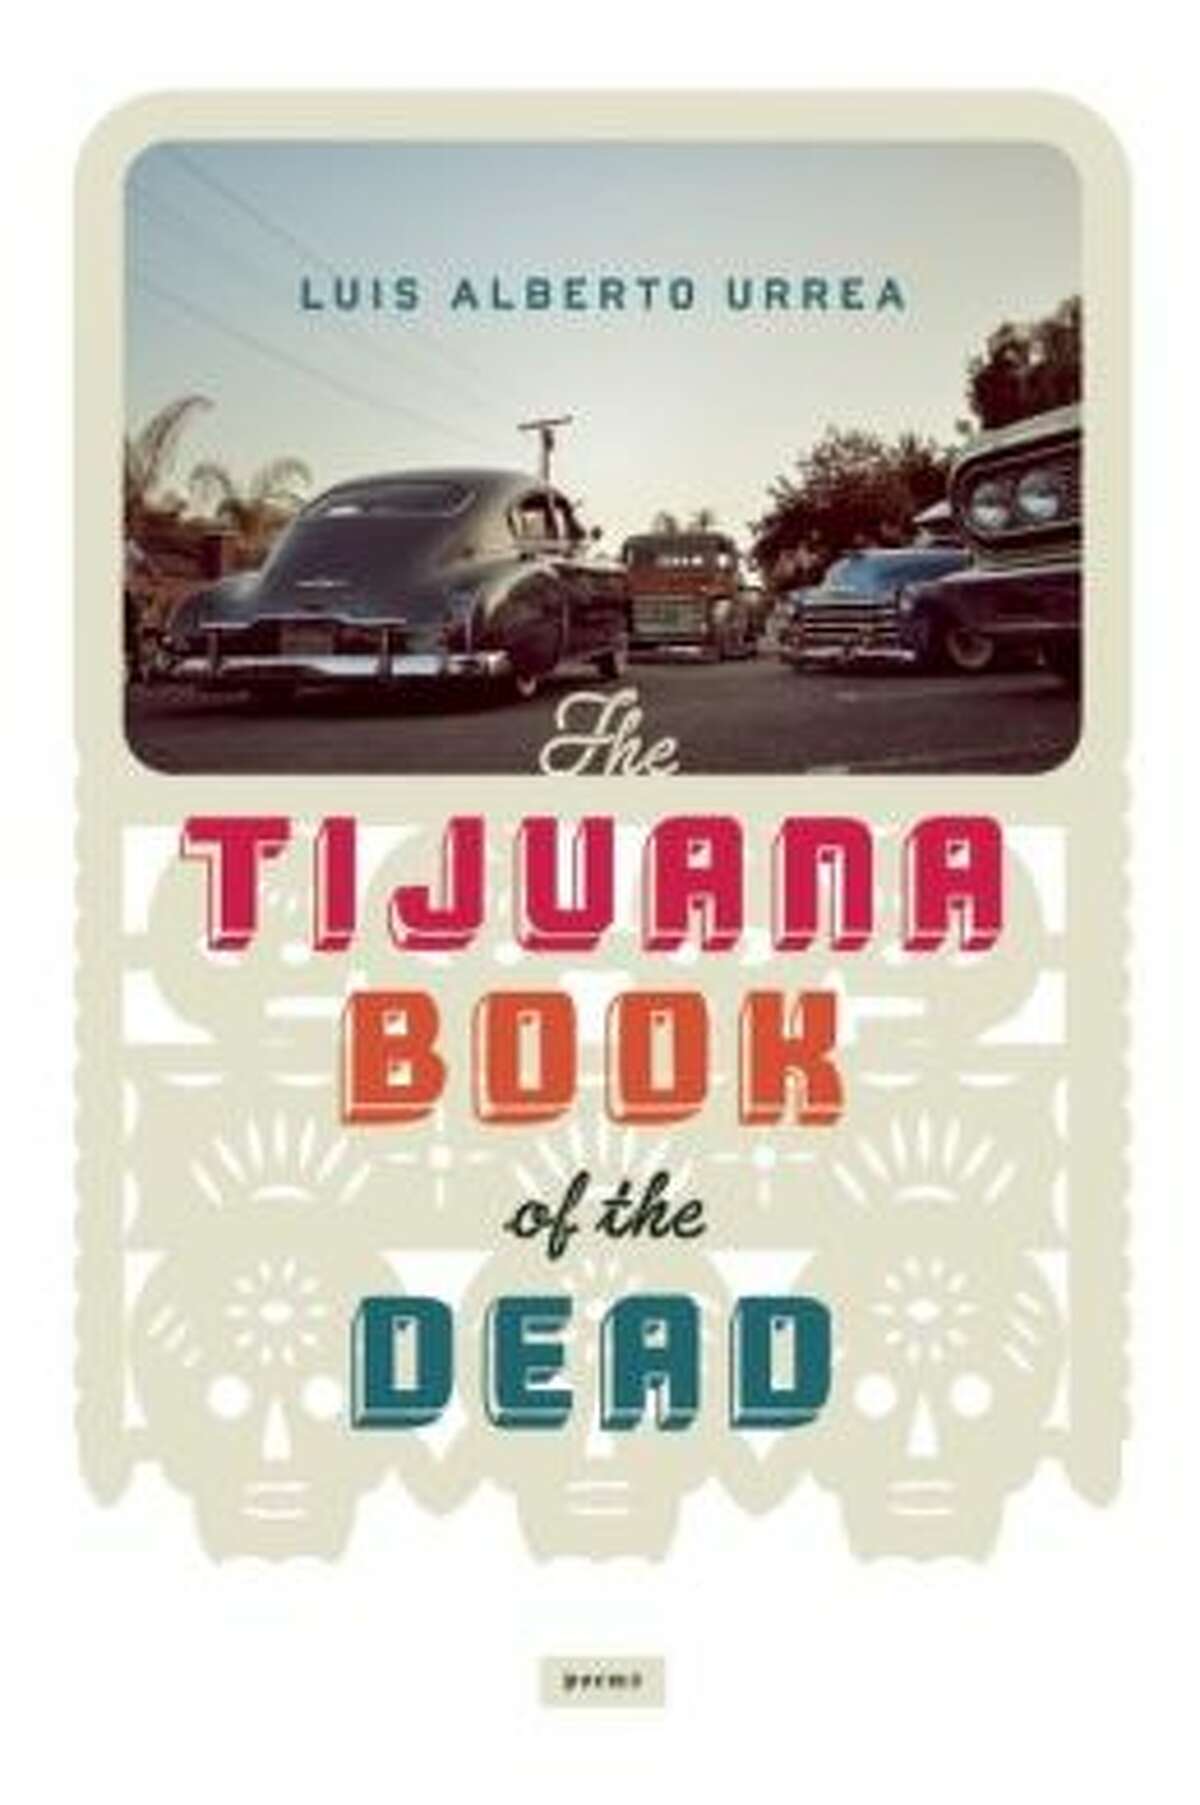 Luis Alberto Urrea calls his new collection of poetry "The Tijuana Book of the Dead" "ferocious."